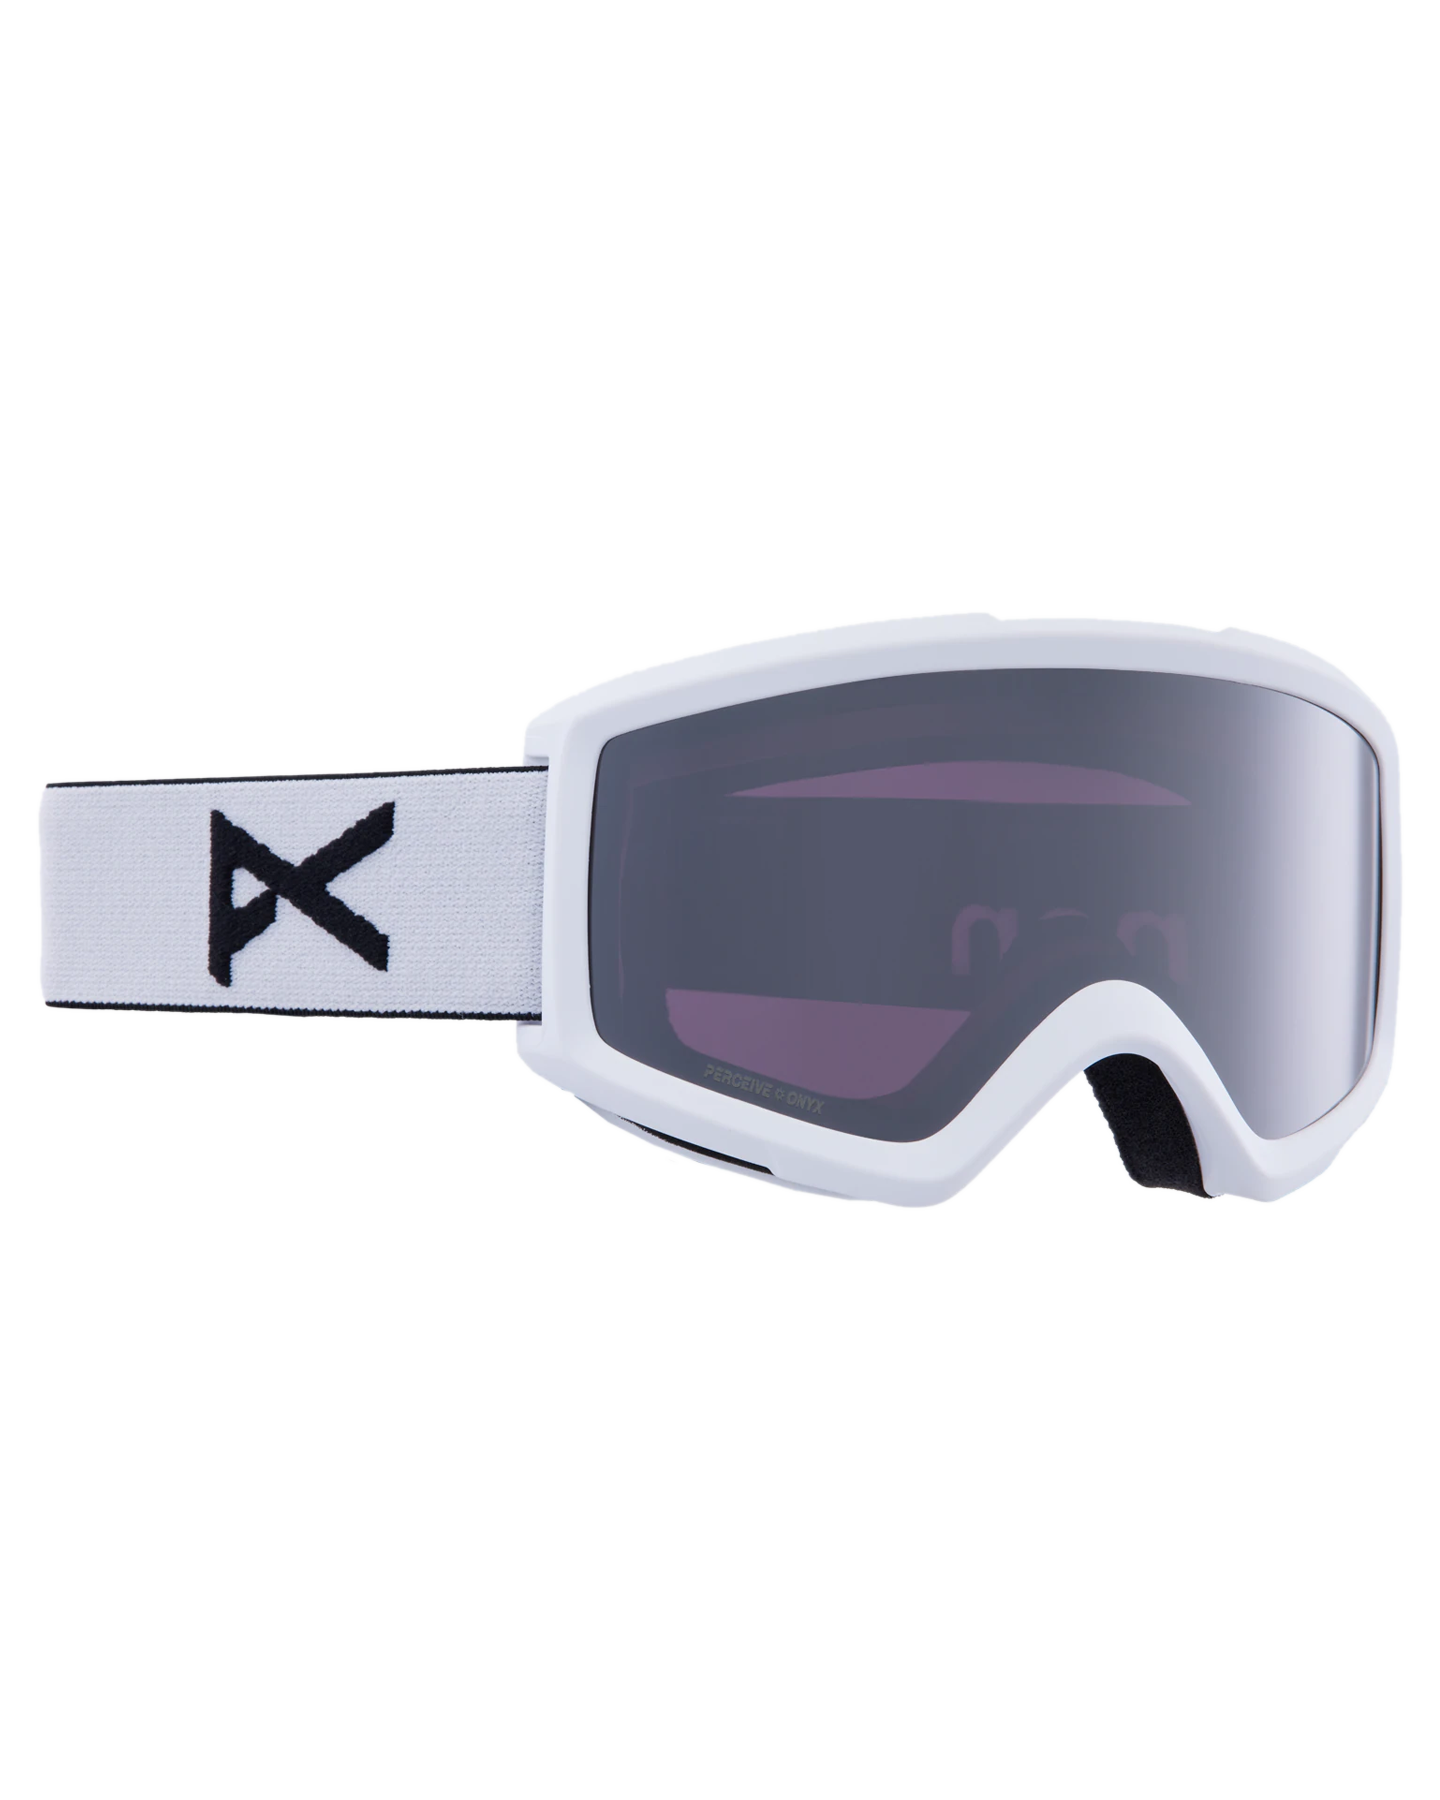 Anon Helix 2.0 Snow Goggles + Bonus Lens - White/Perceive Sunny Onyx Lens Men's Snow Goggles - Trojan Wake Ski Snow